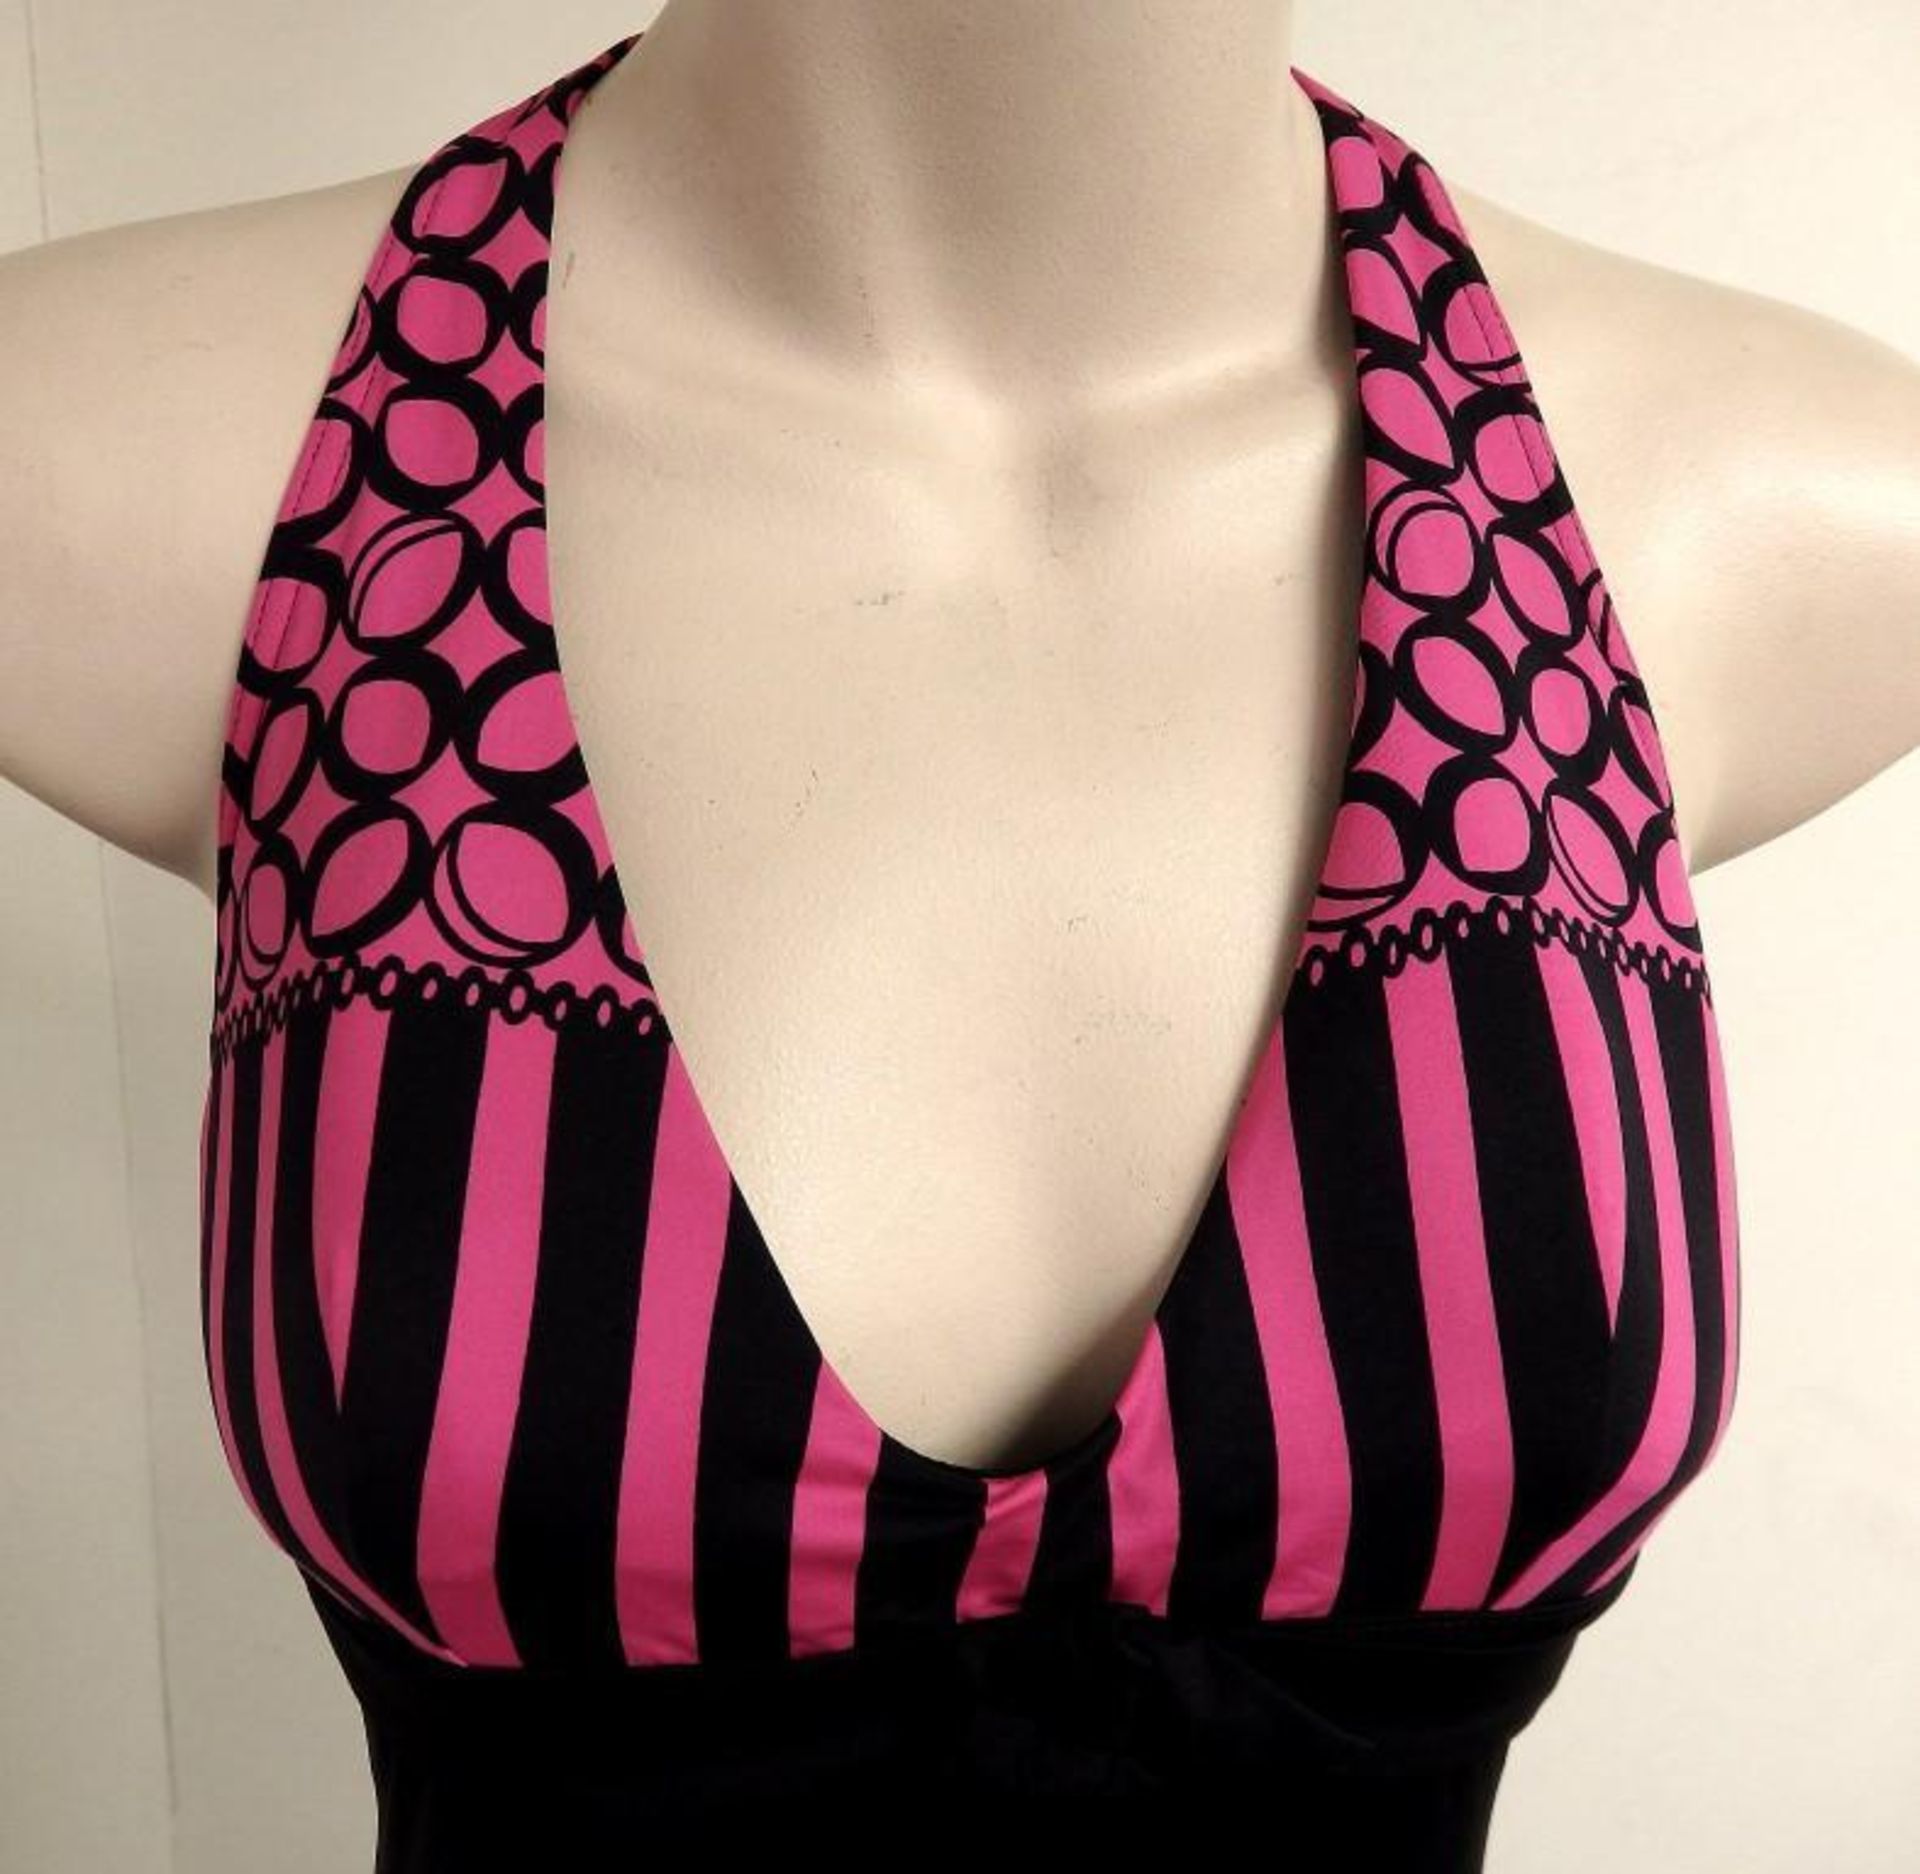 1 x Rasurel - Black/Pink patterned - Borneo Swimsuit - R20434 - Size 2C - UK 32 - Fr 85 - EU/Int 70 - Image 3 of 7